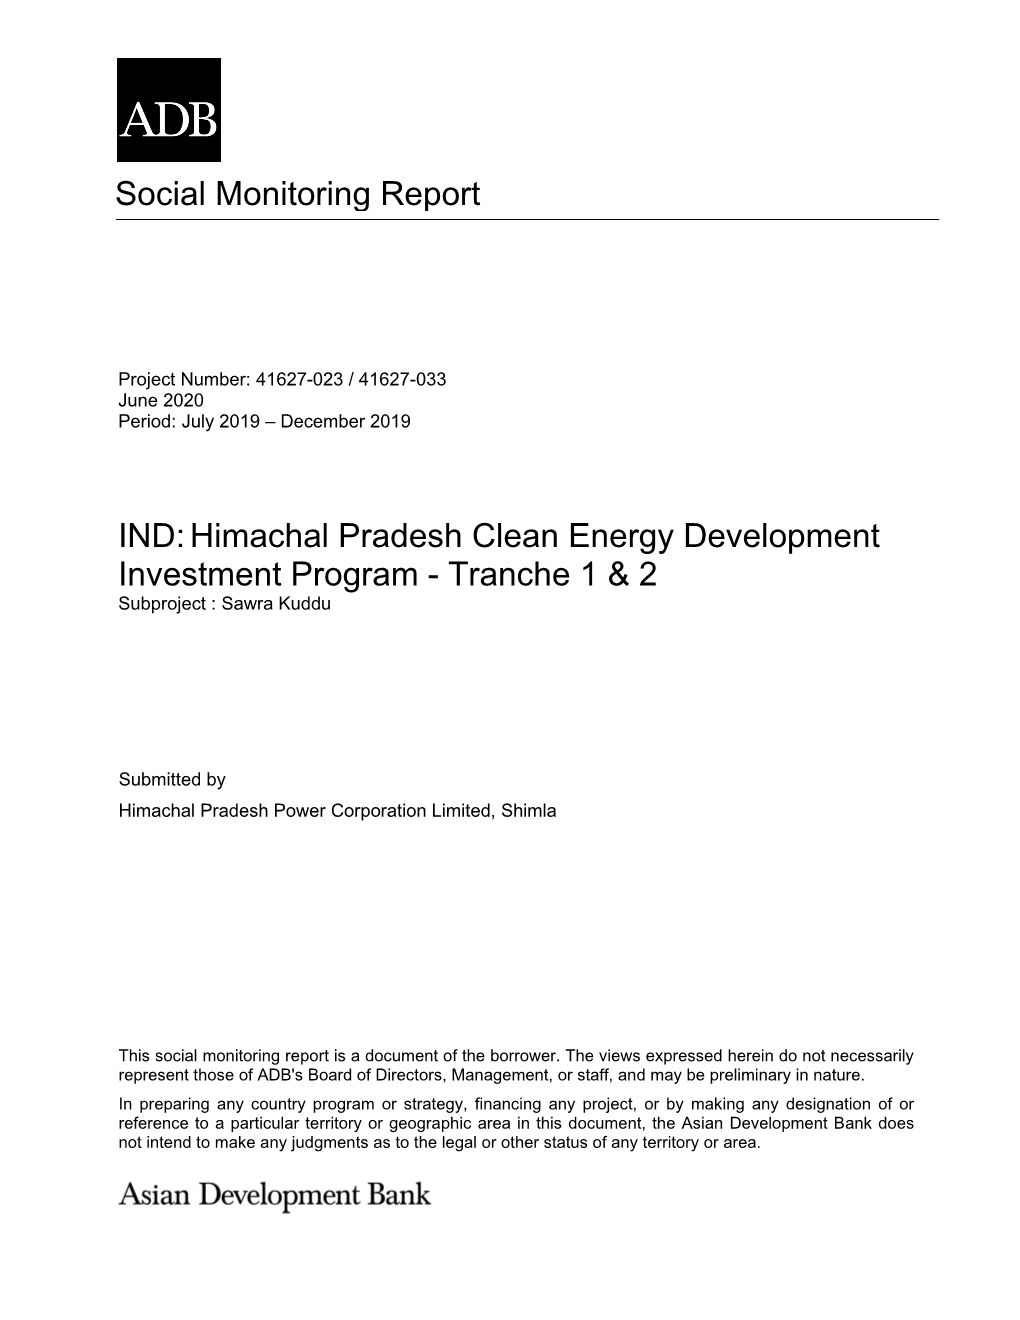 41627-033: Himachal Pradesh Clean Energ